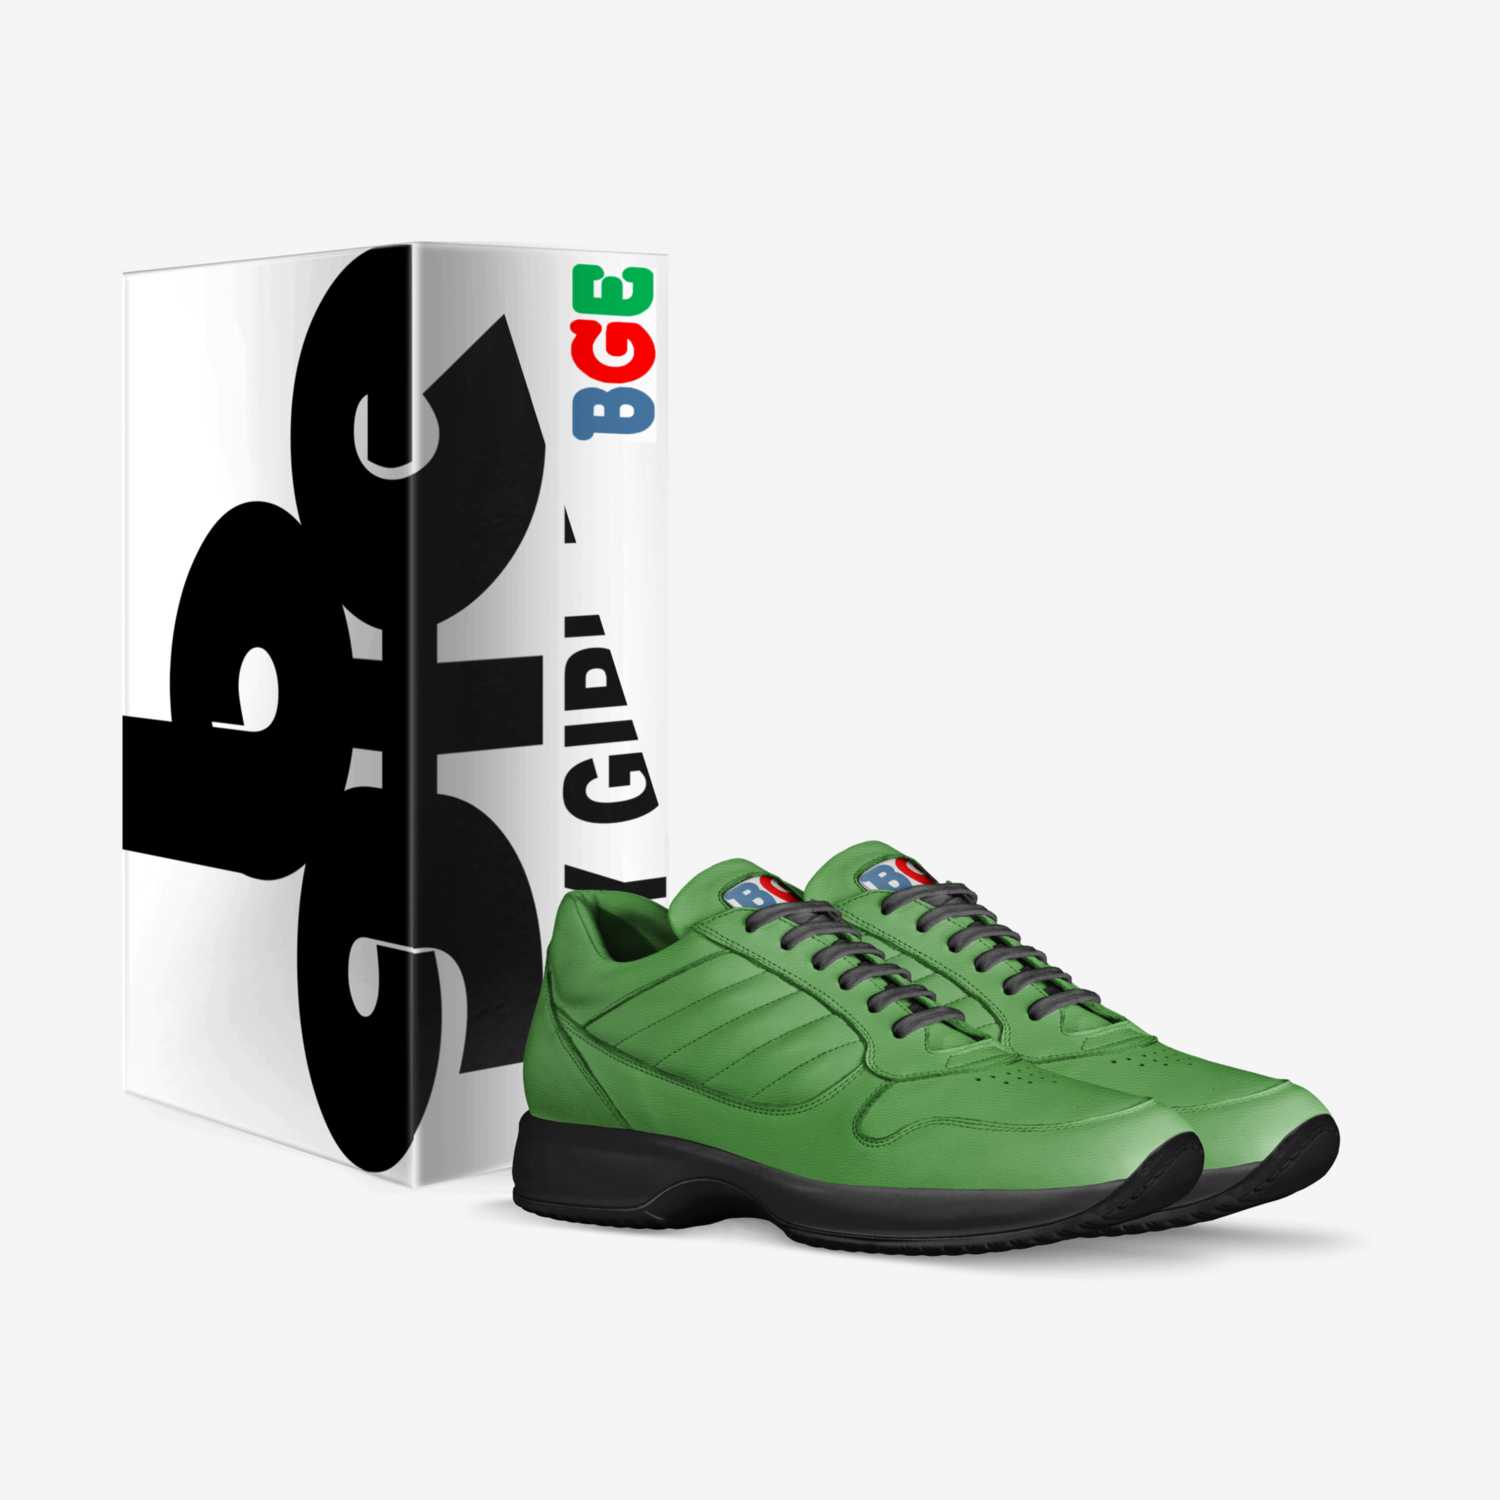 Gina Lime Adagio custom made in Italy shoes by Krishan Myrick | Box view